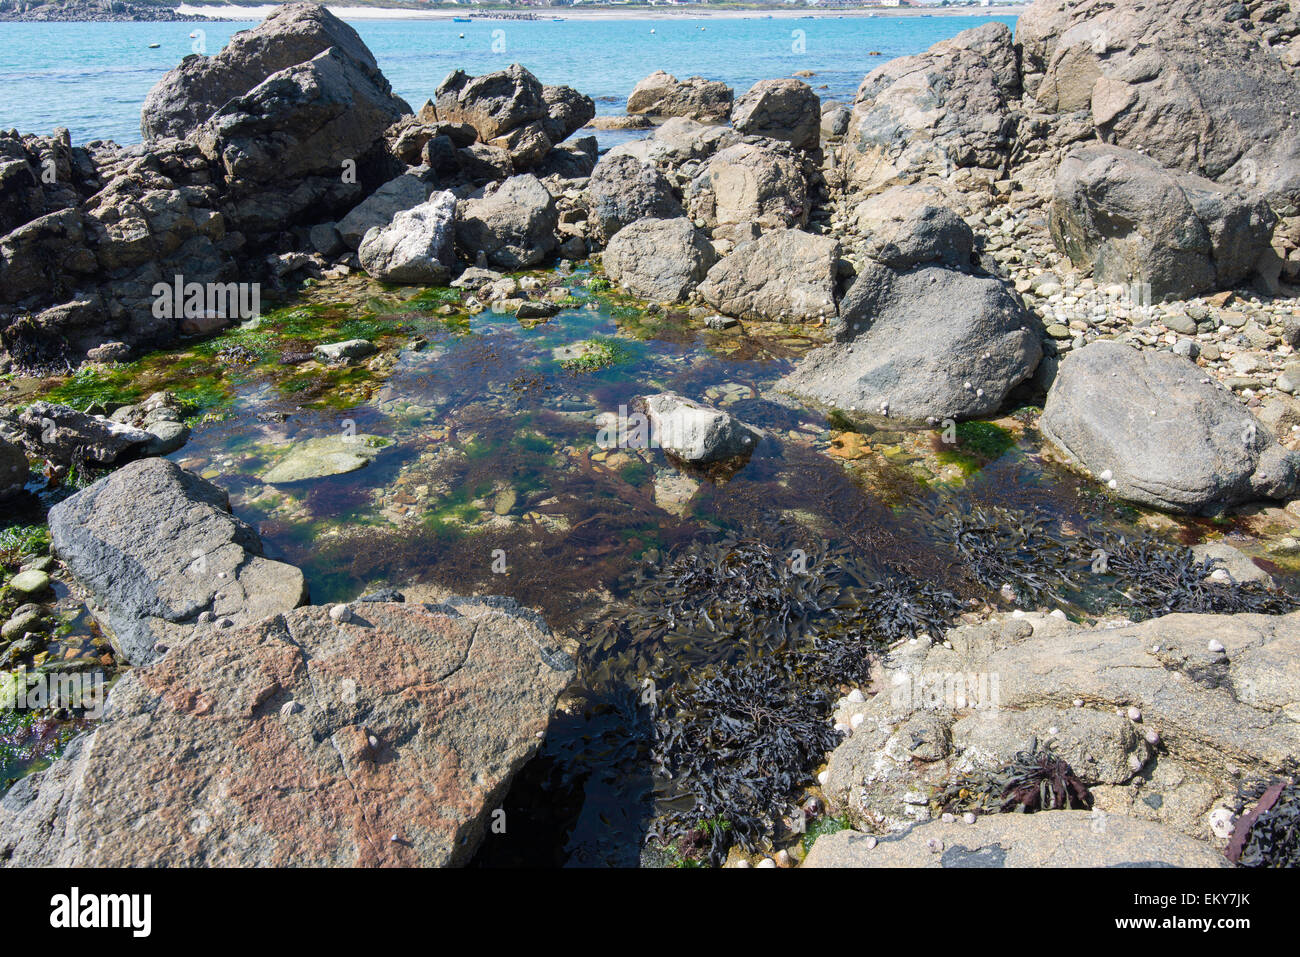 Intertidal rock pool. Stock Photo